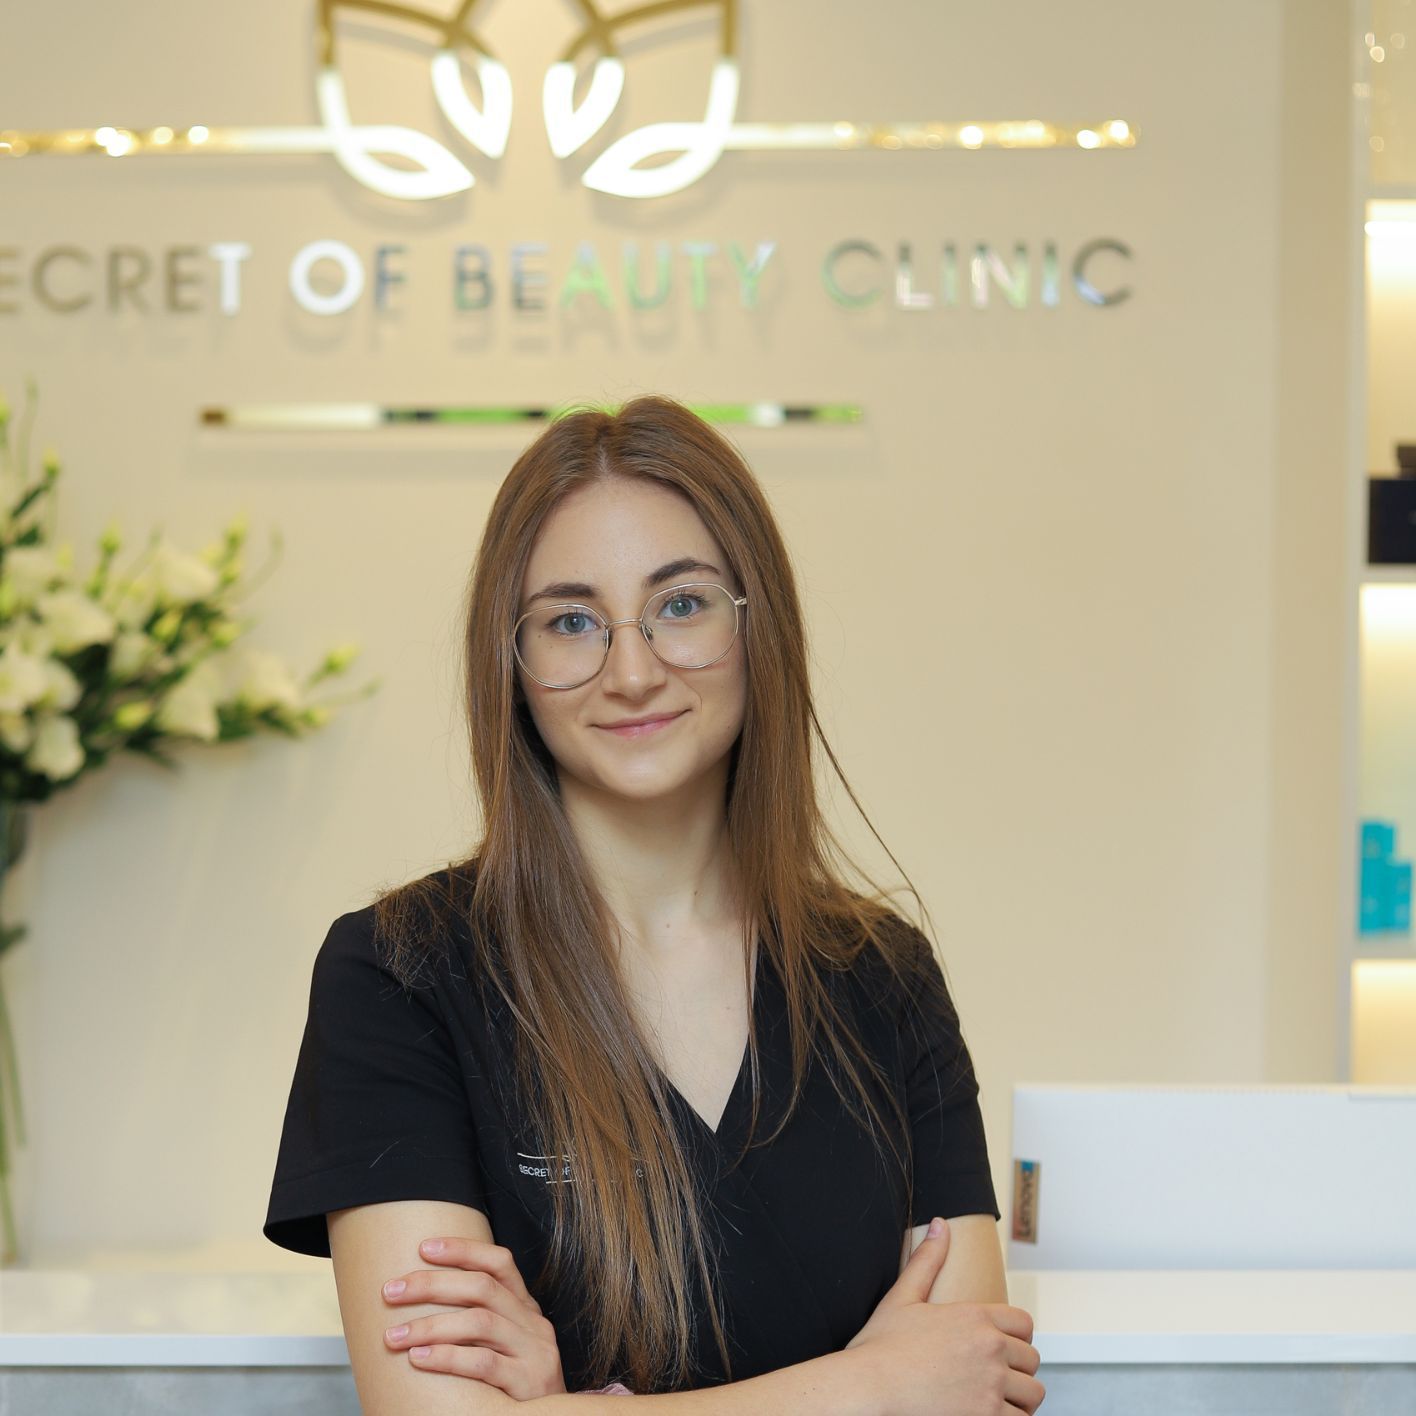 Natalia Kierzkowska - Secret of Beauty Clinic